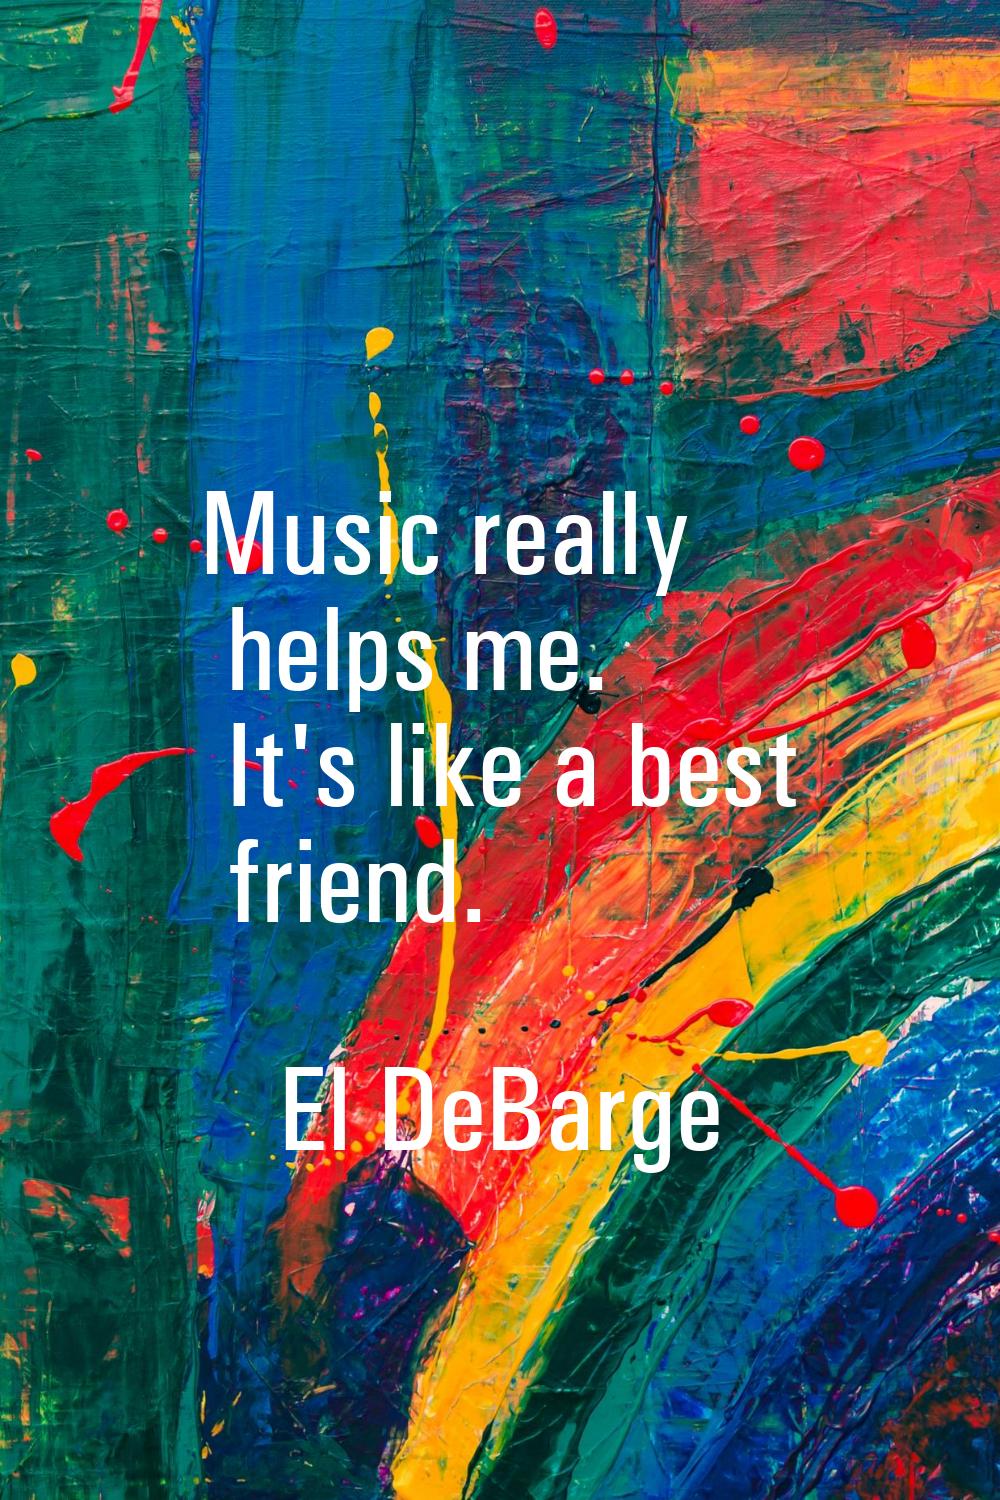 Music really helps me. It's like a best friend.